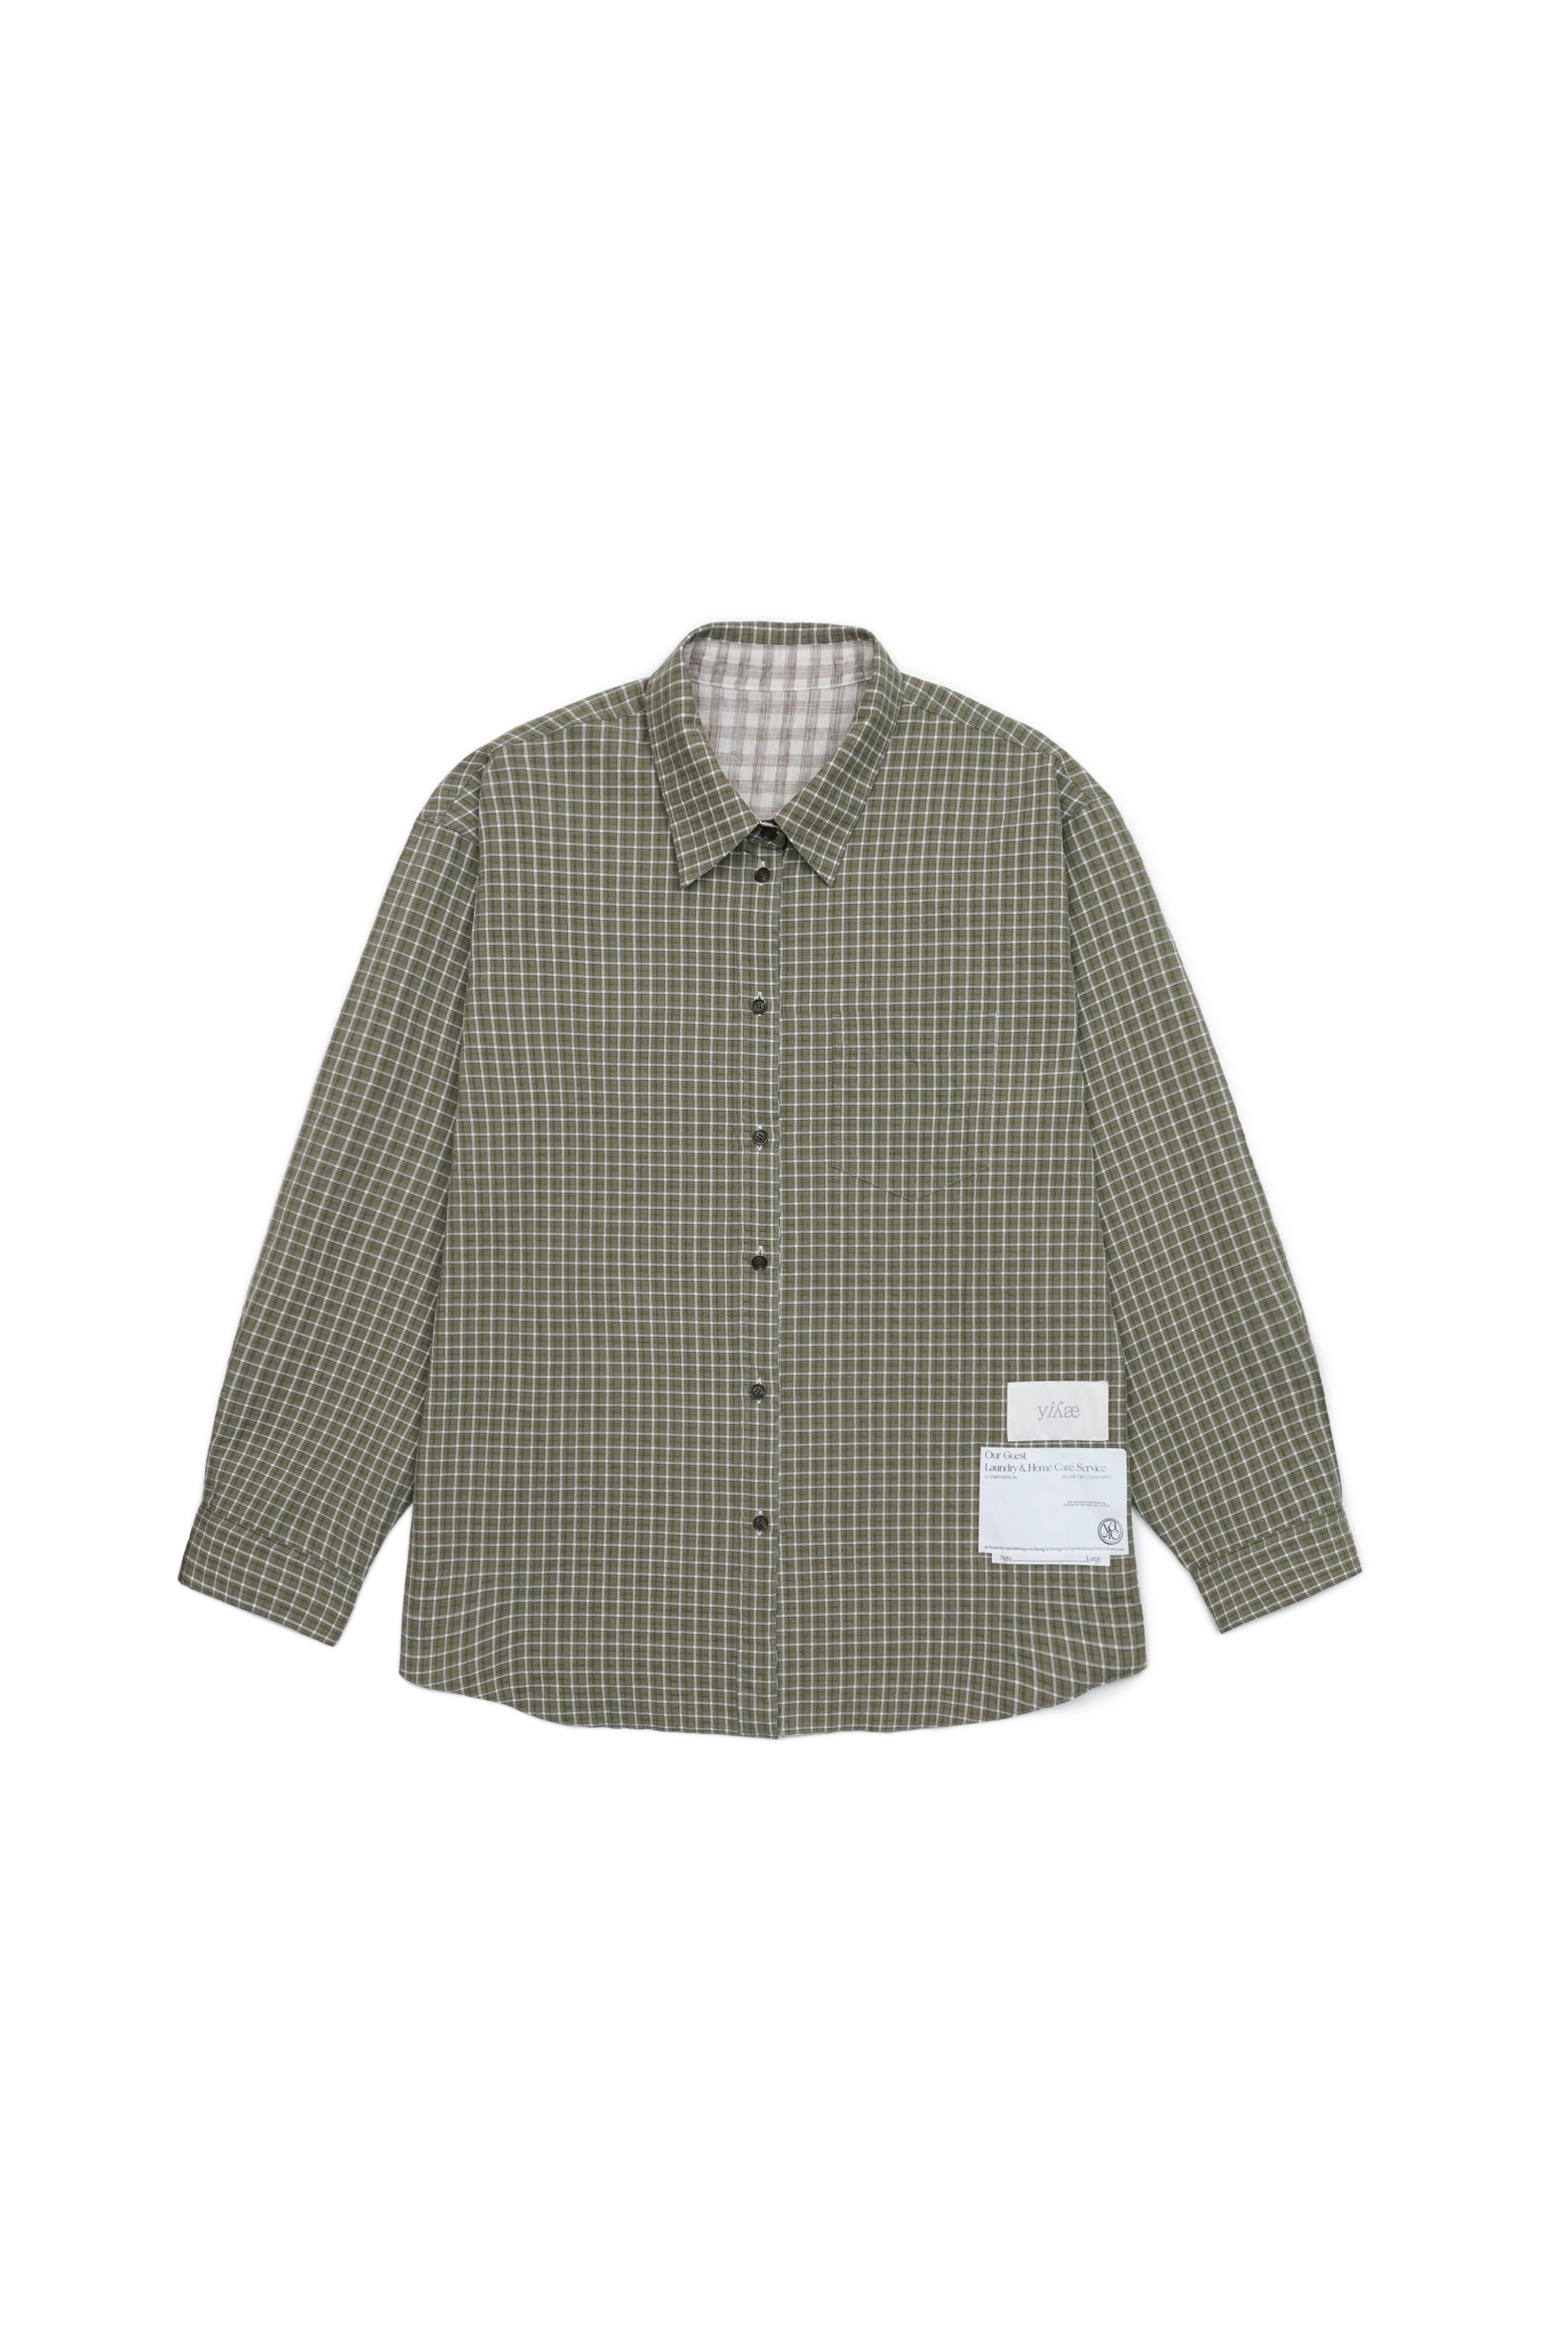 Reversible Check Shirts _ Ivory Green